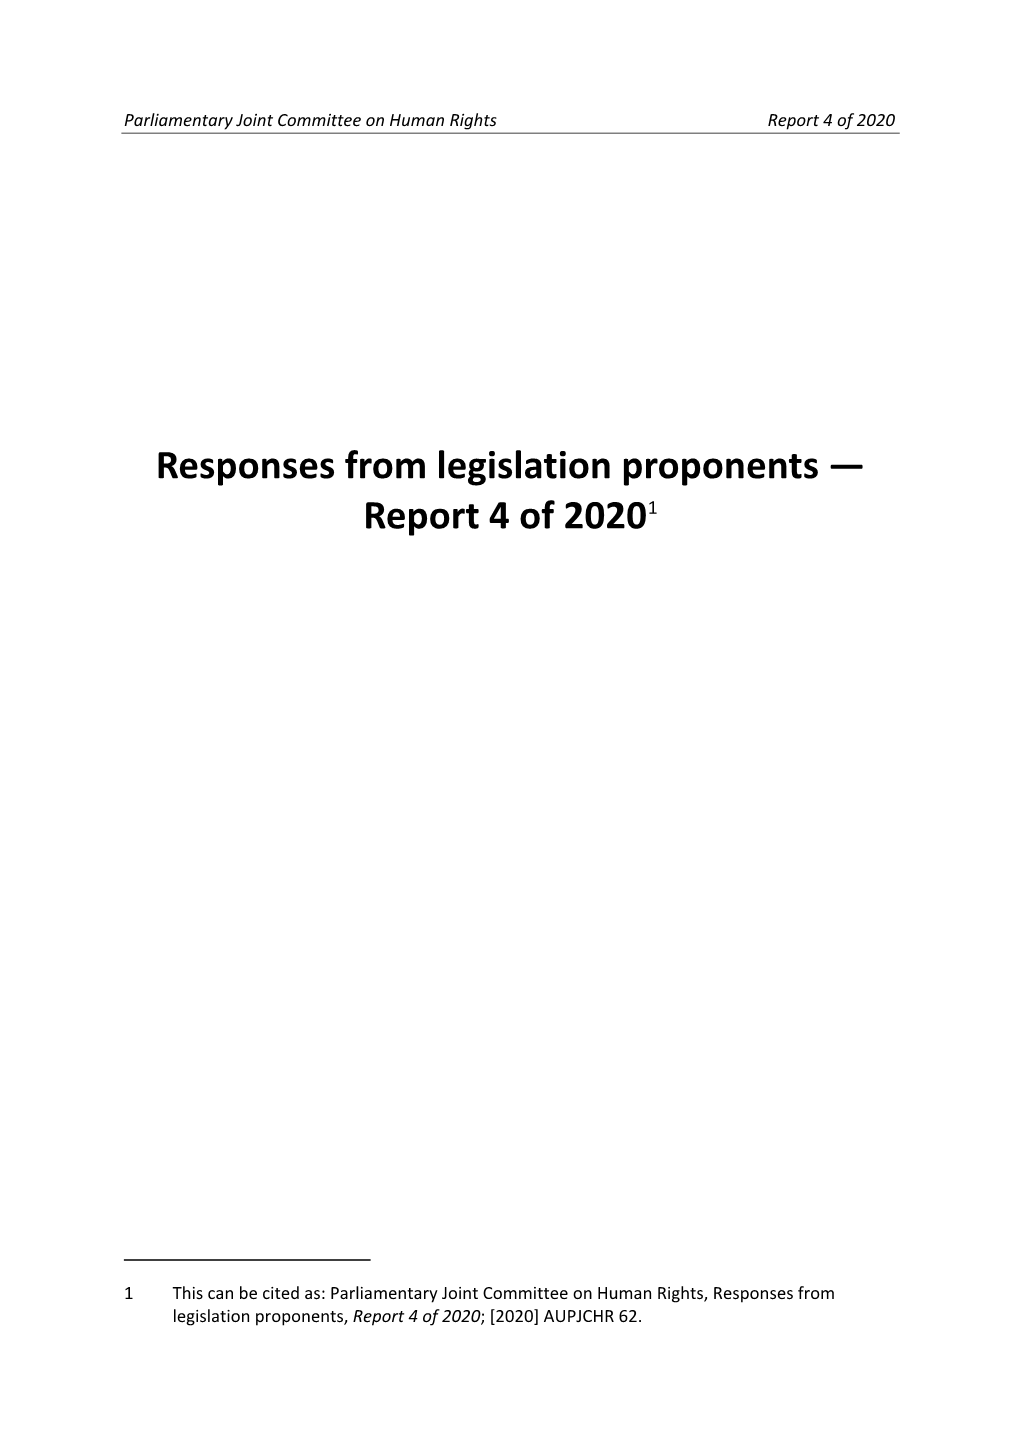 Responses from Legislation Proponents — Report 4 of 20201